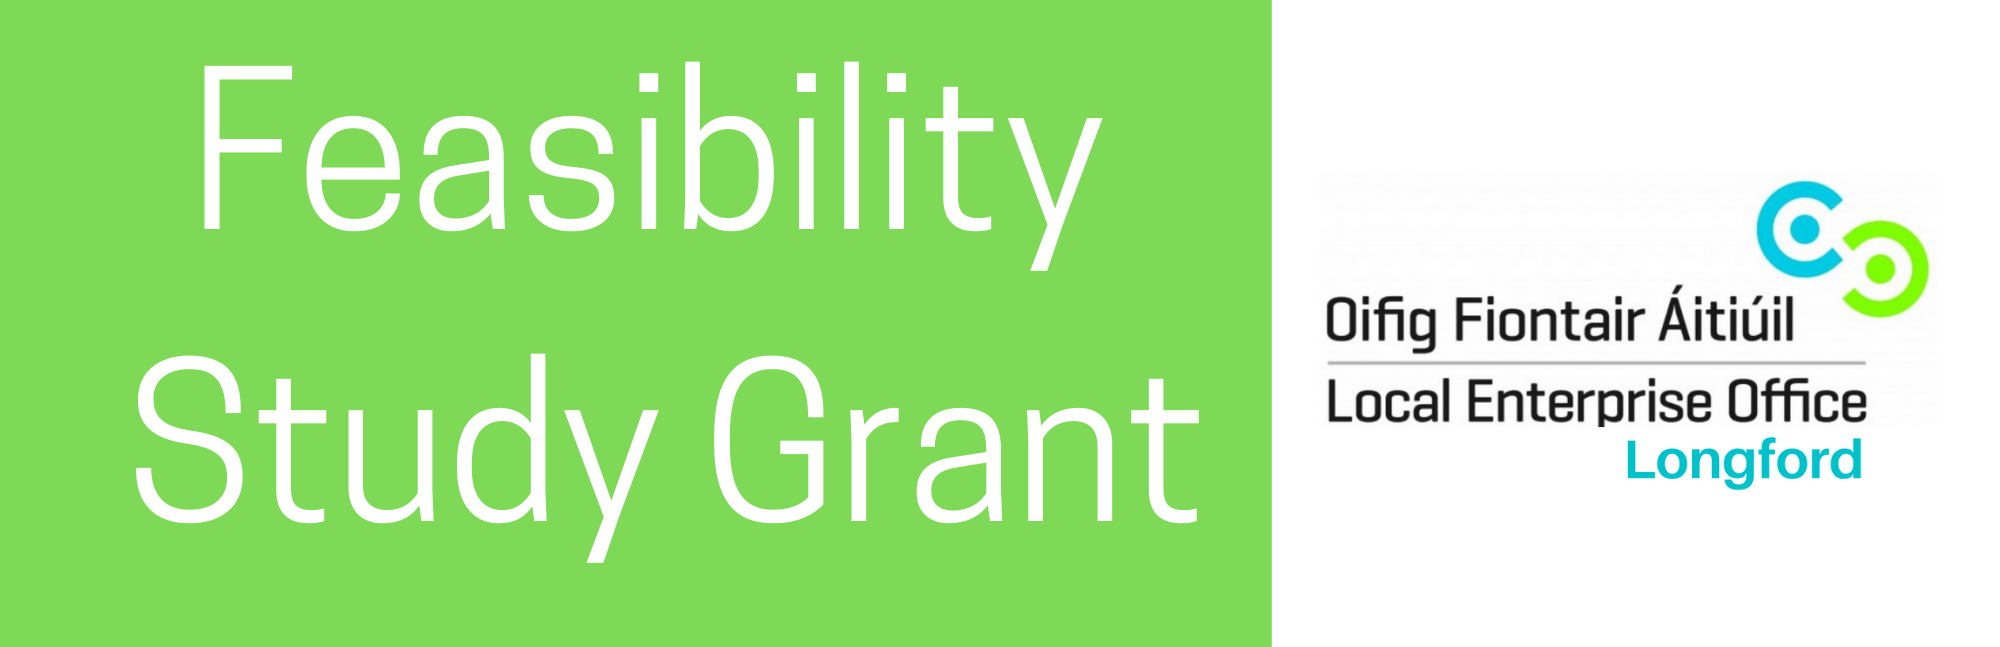 Feasibility Study Grant